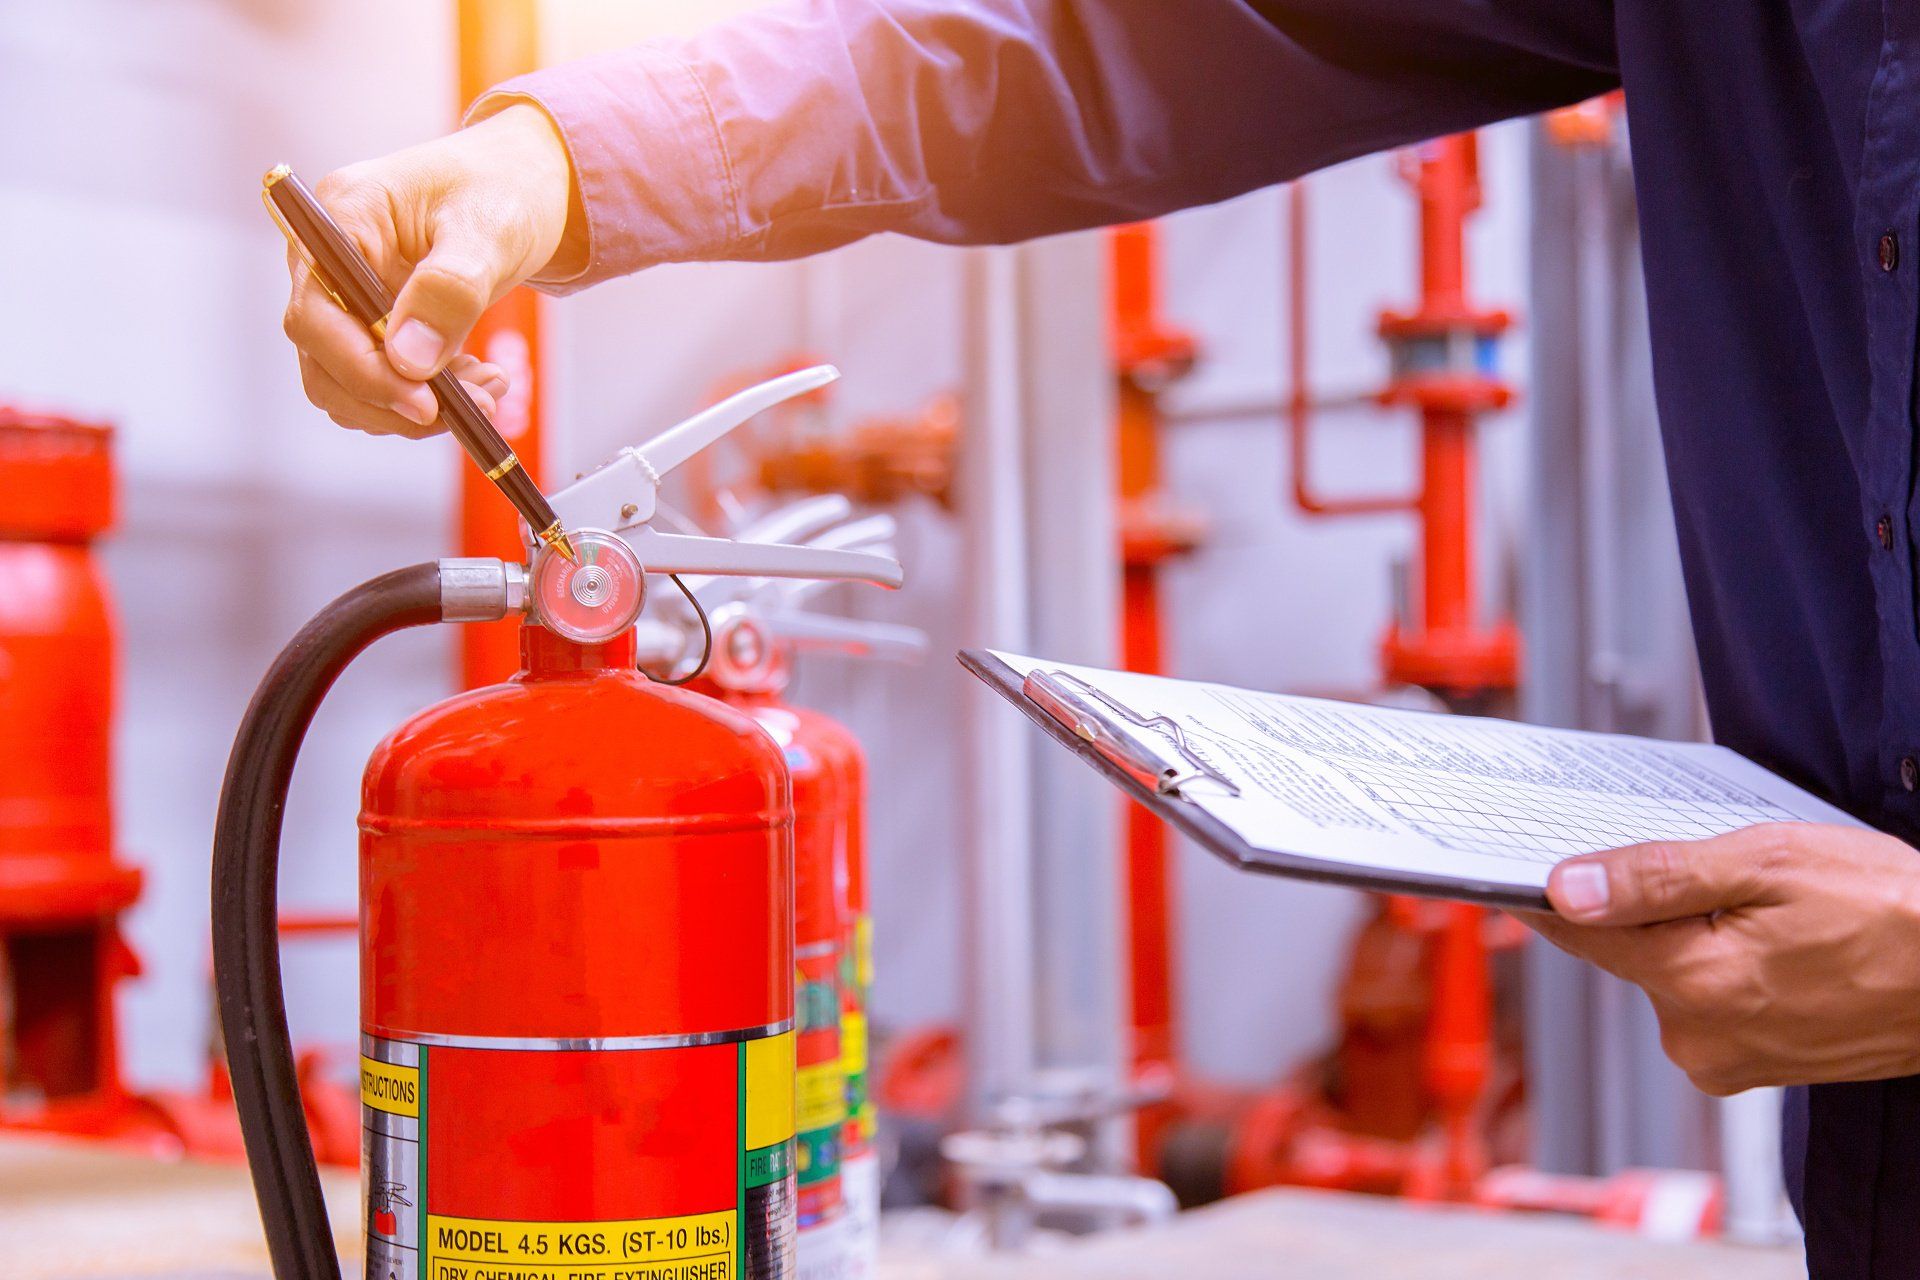 Fire extinguisher safety checks